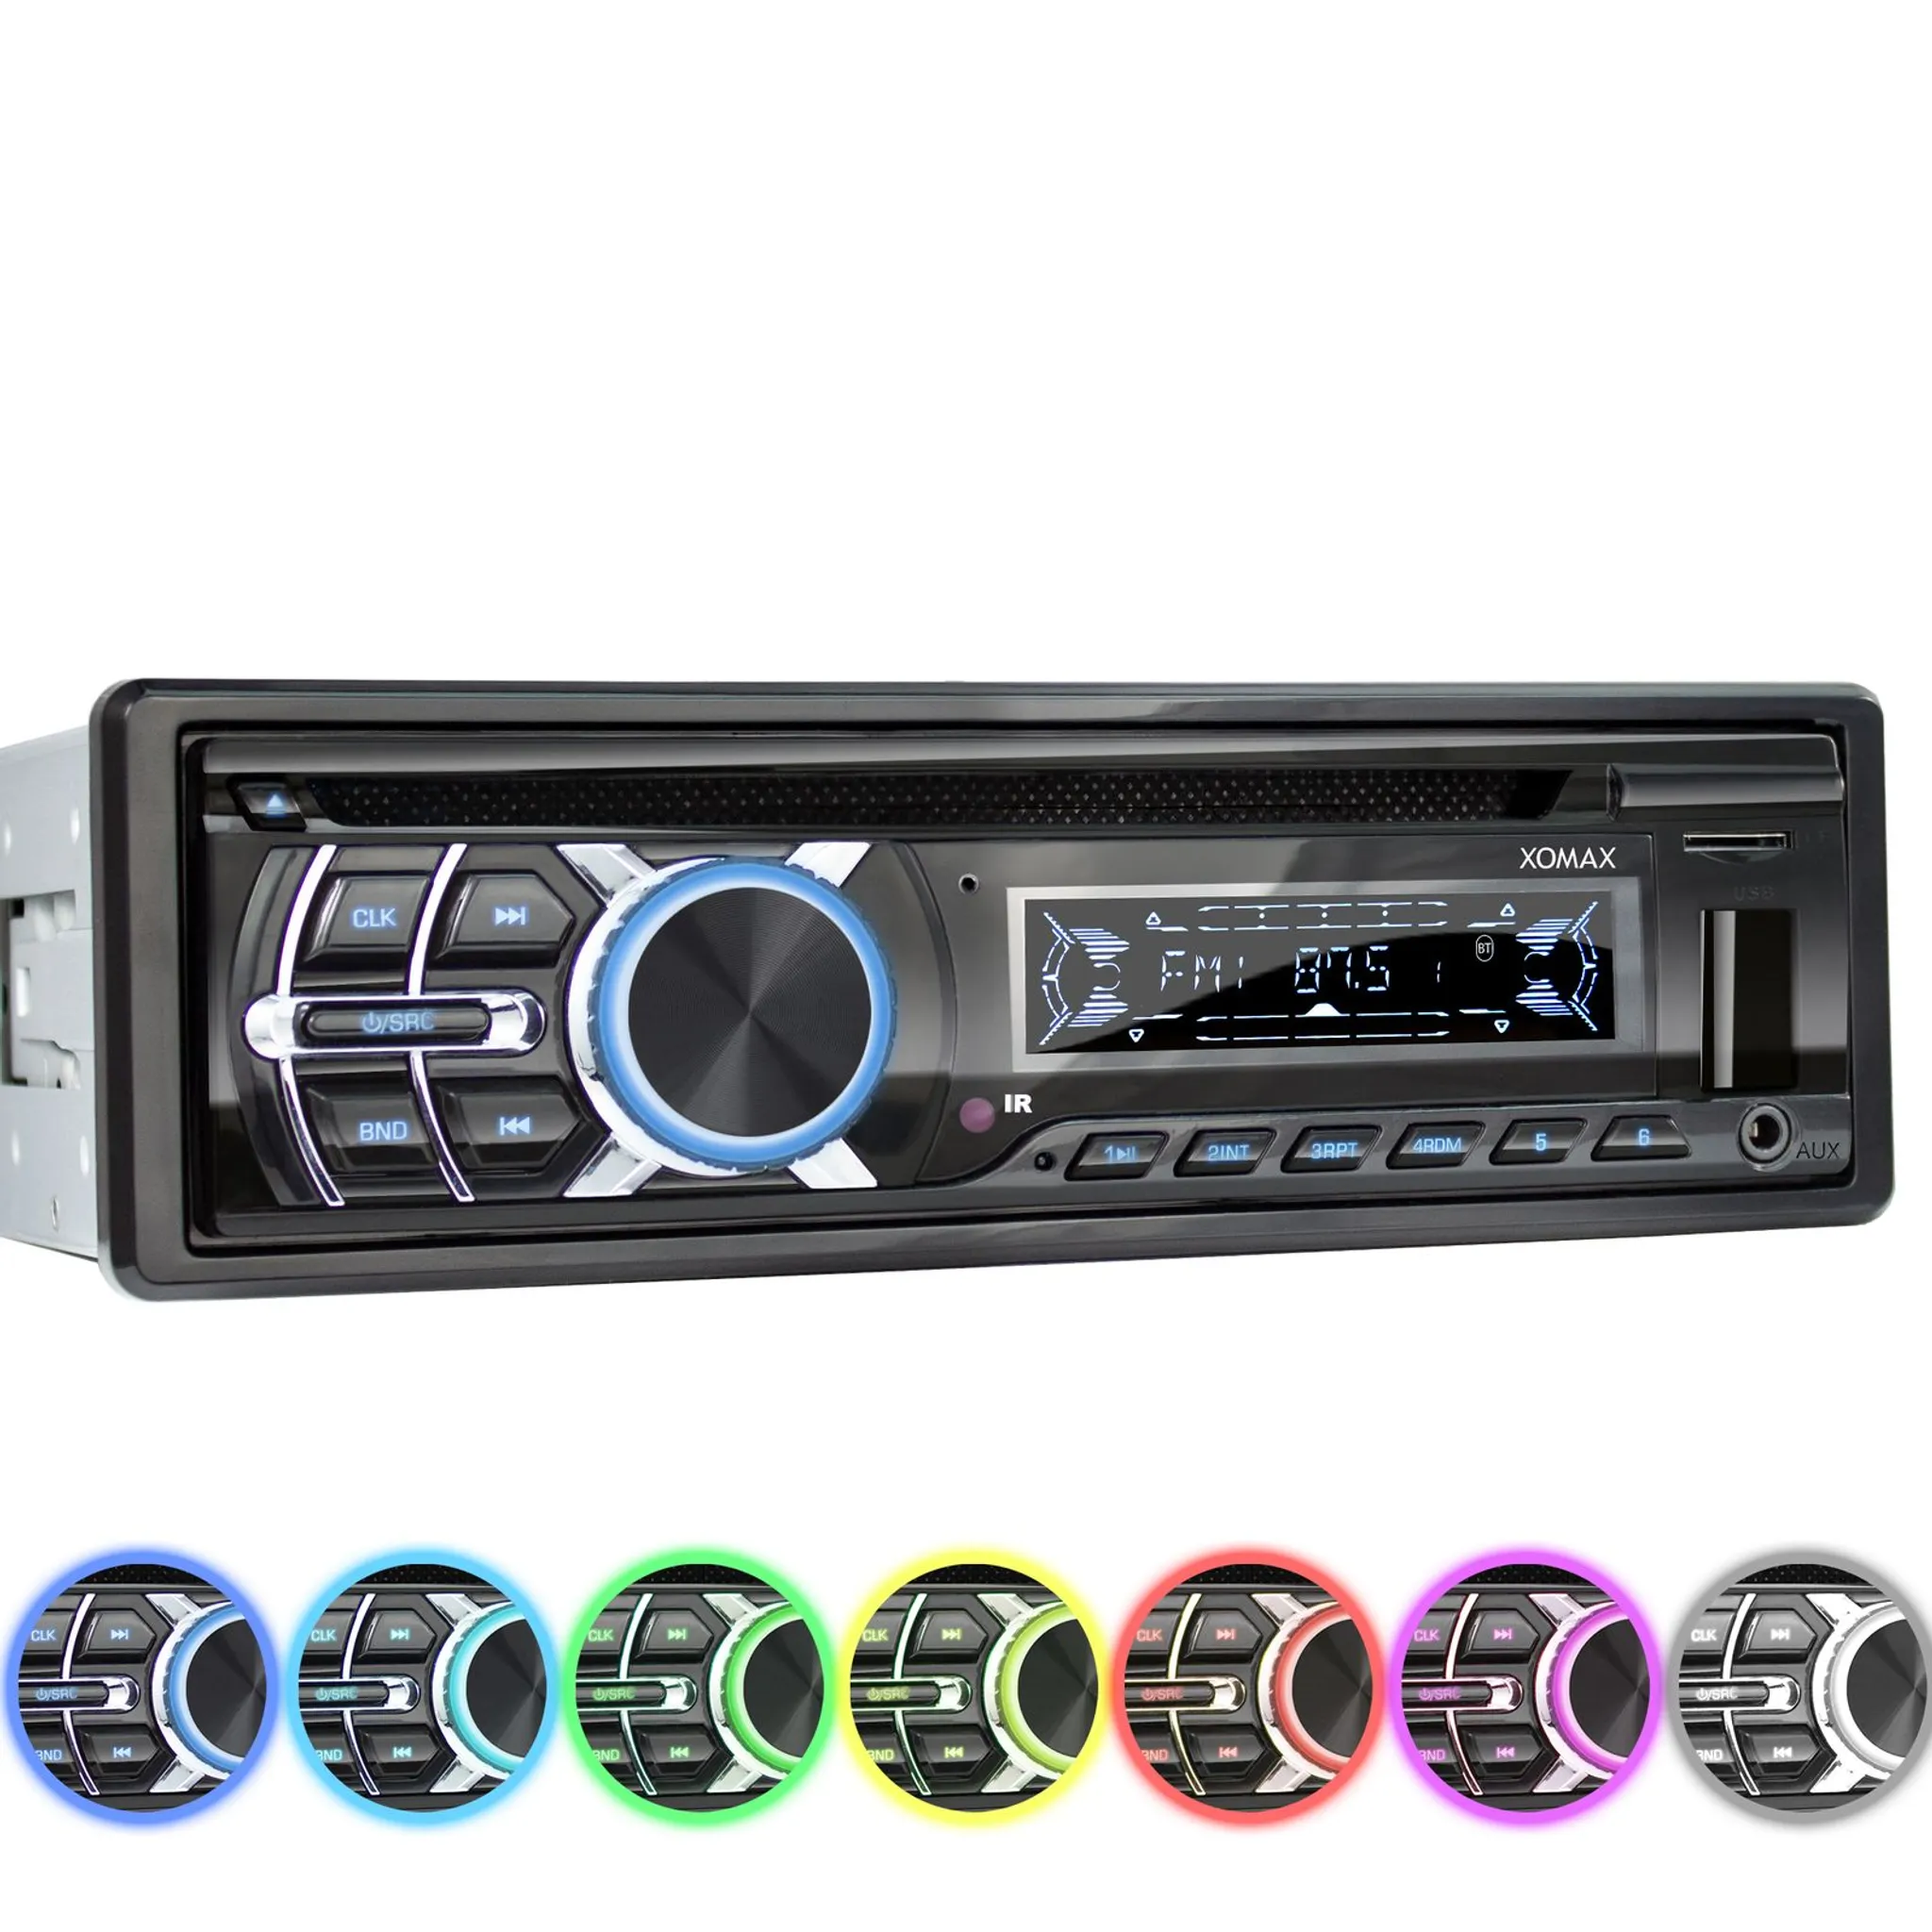 XOMAX XM-CDB624 Autoradio mit CD Player, Bluetooth